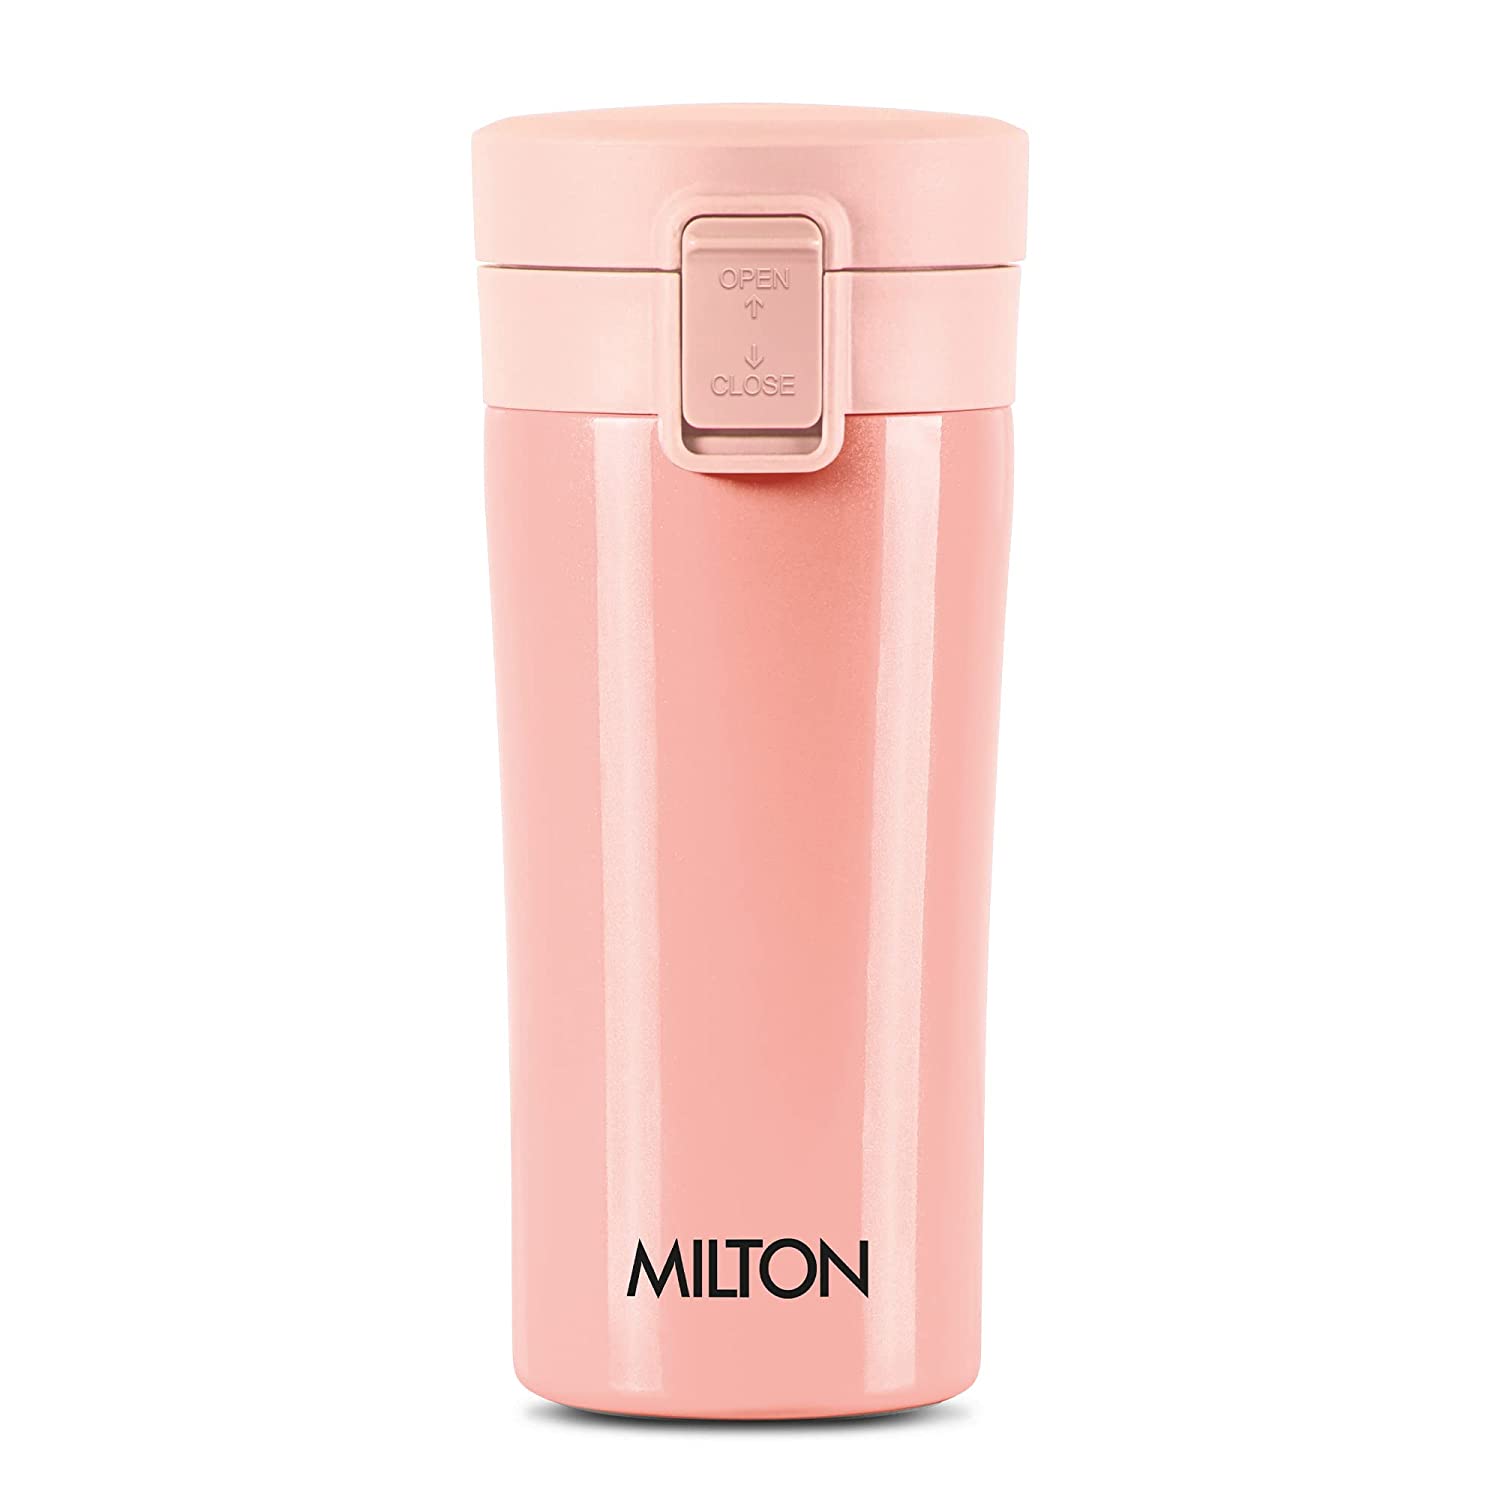 milton-mug